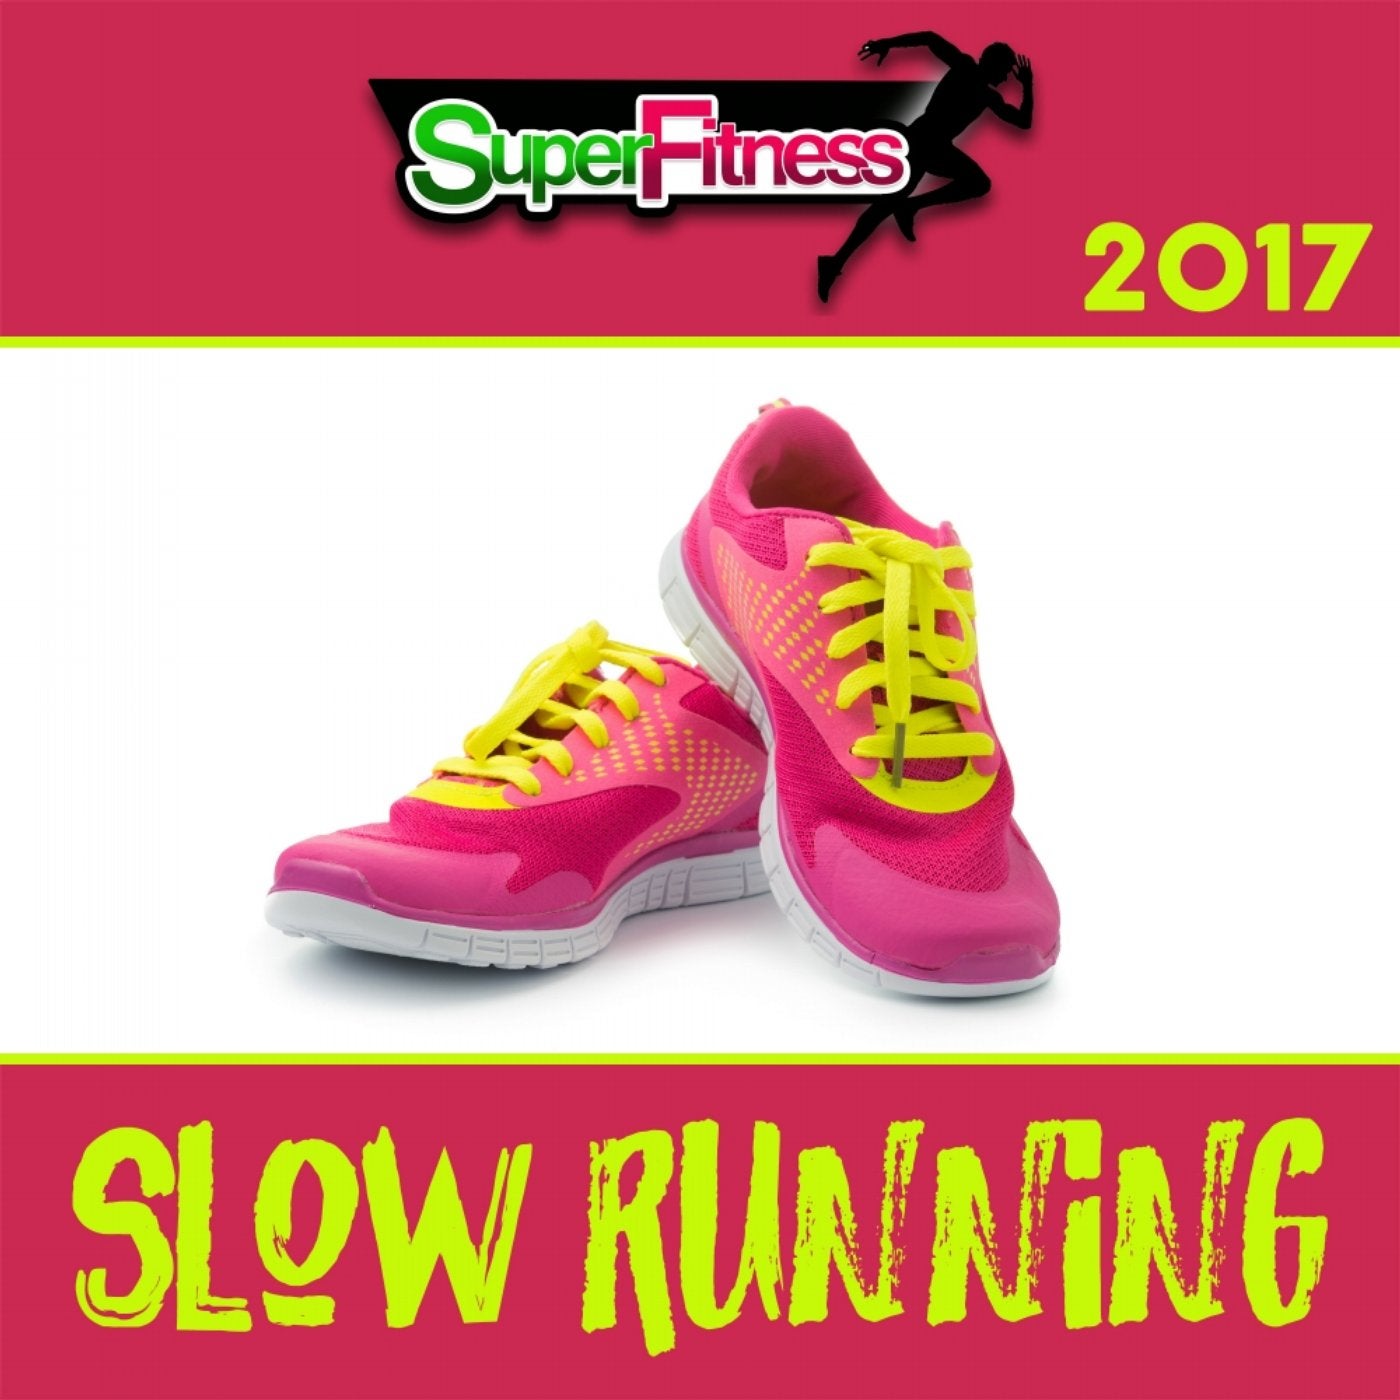 Slow Running 2017